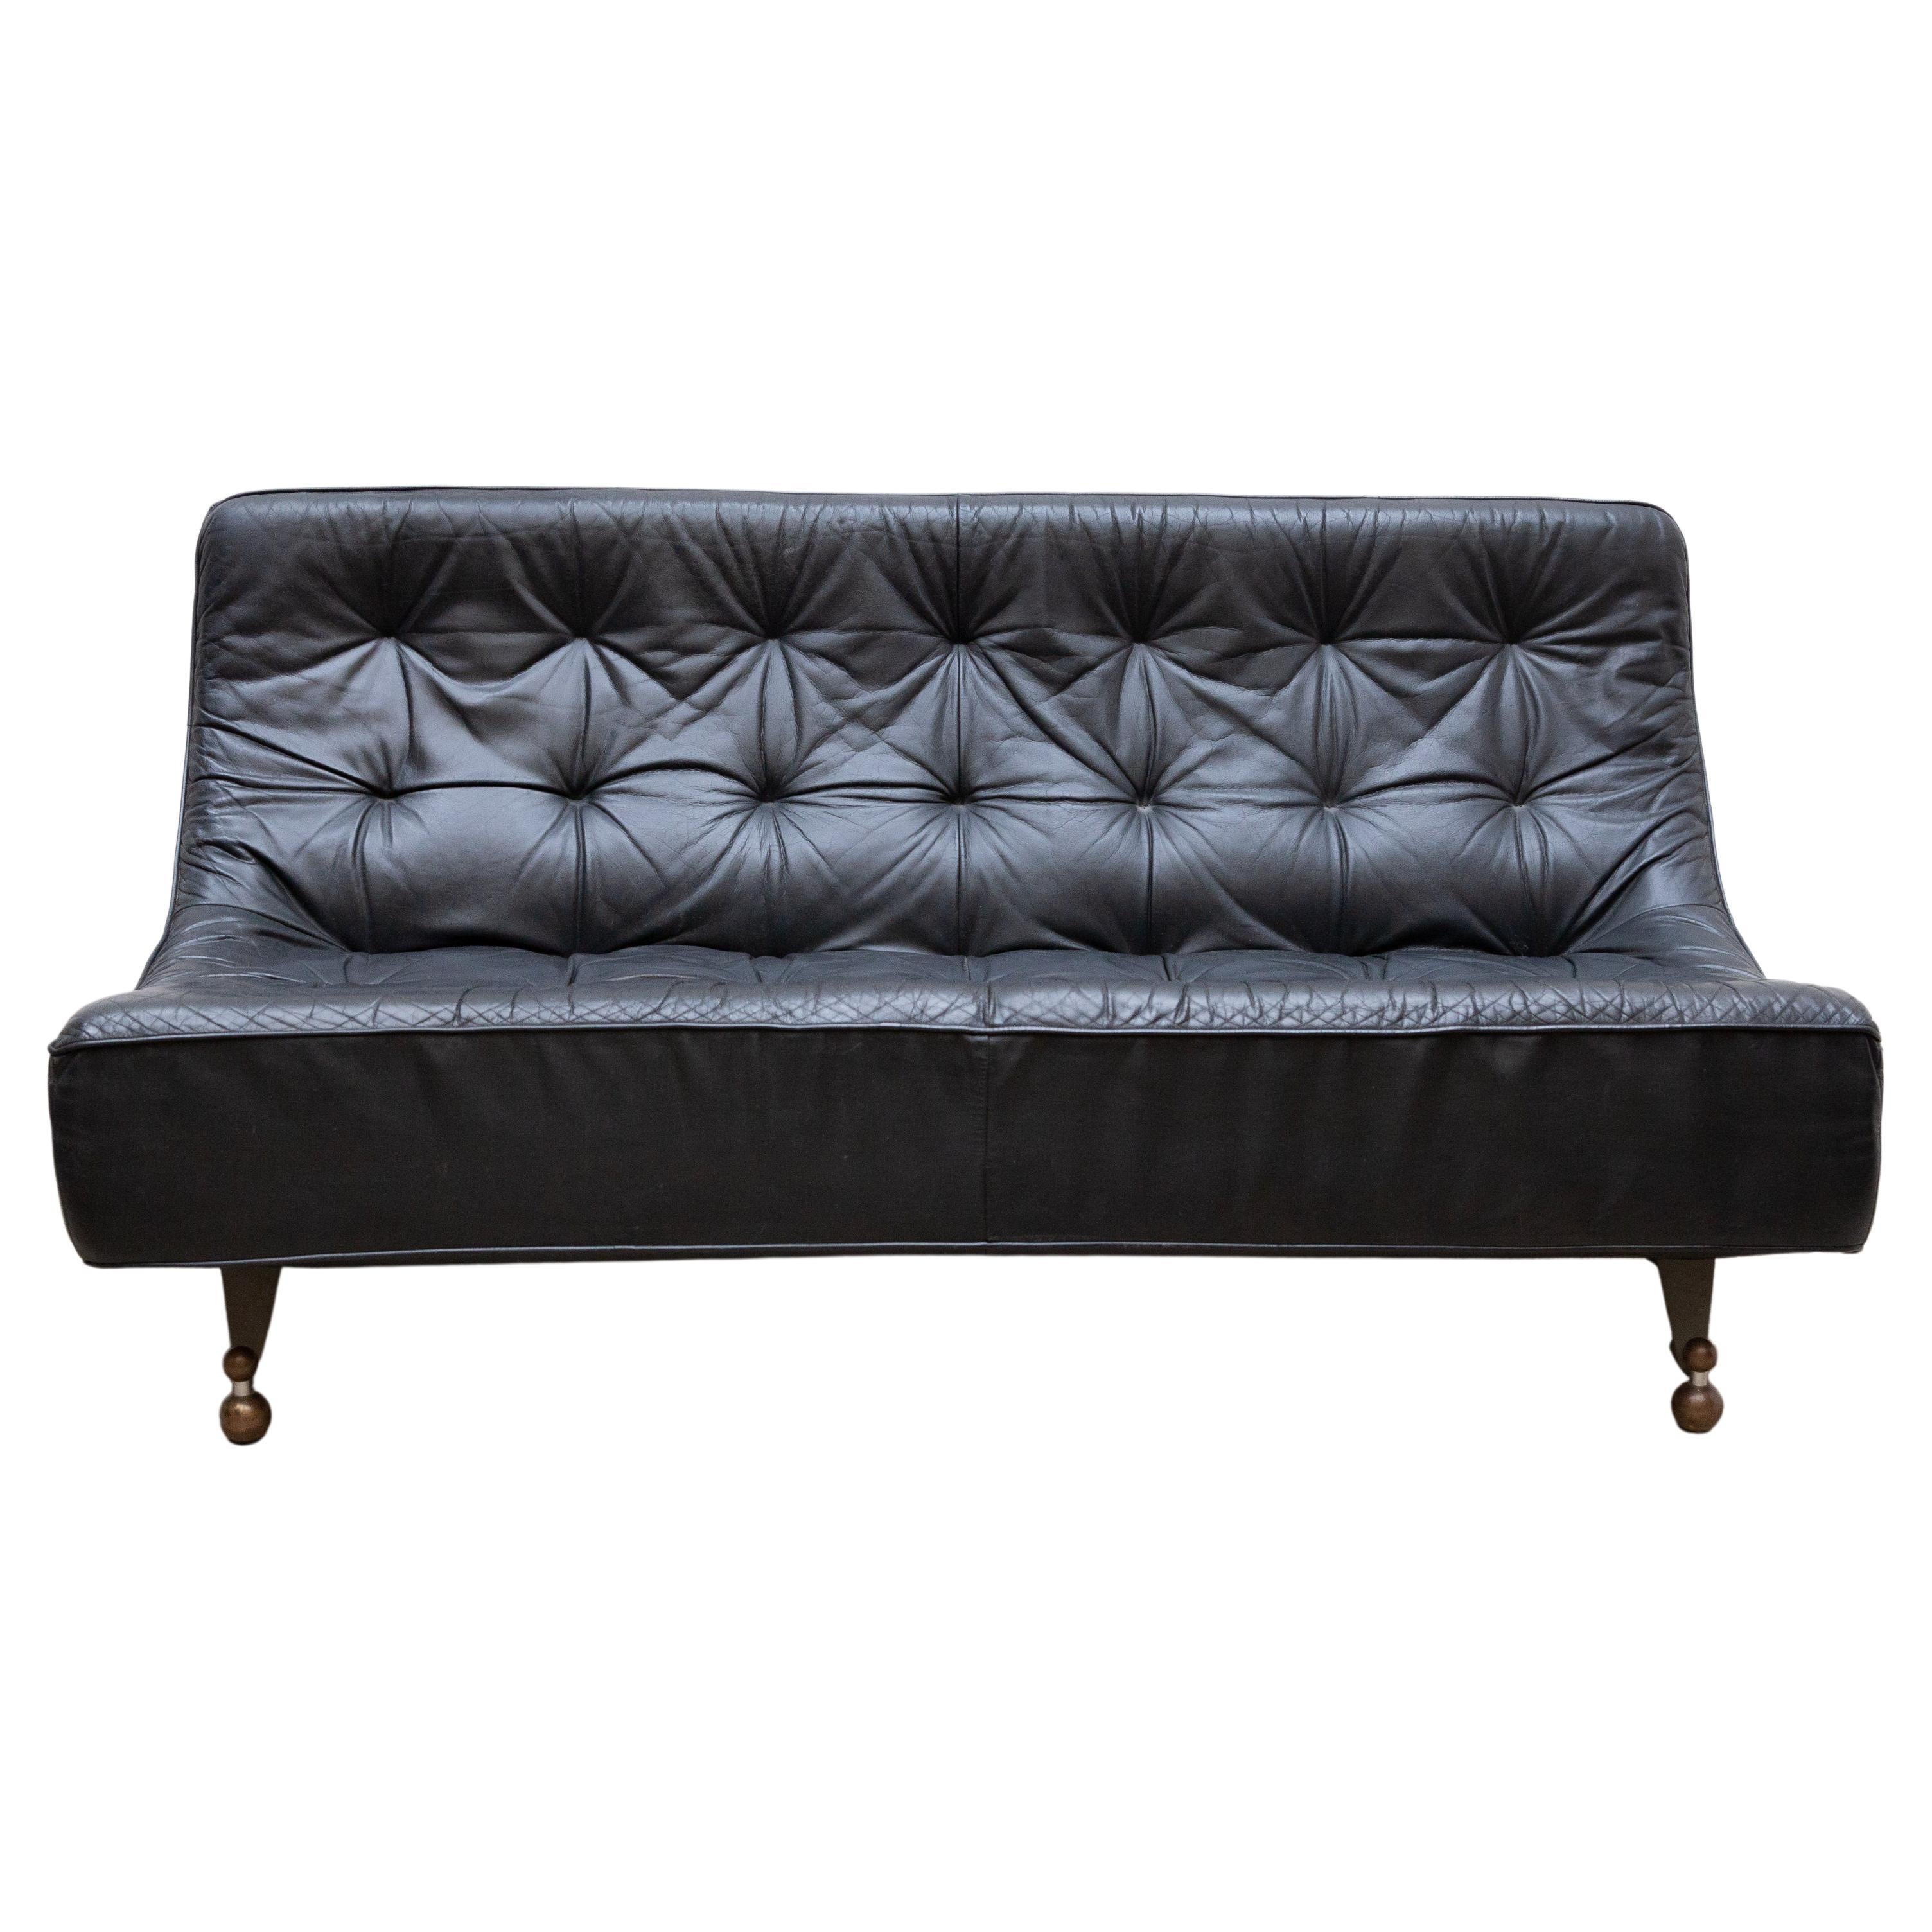 Black leather Sofa model 